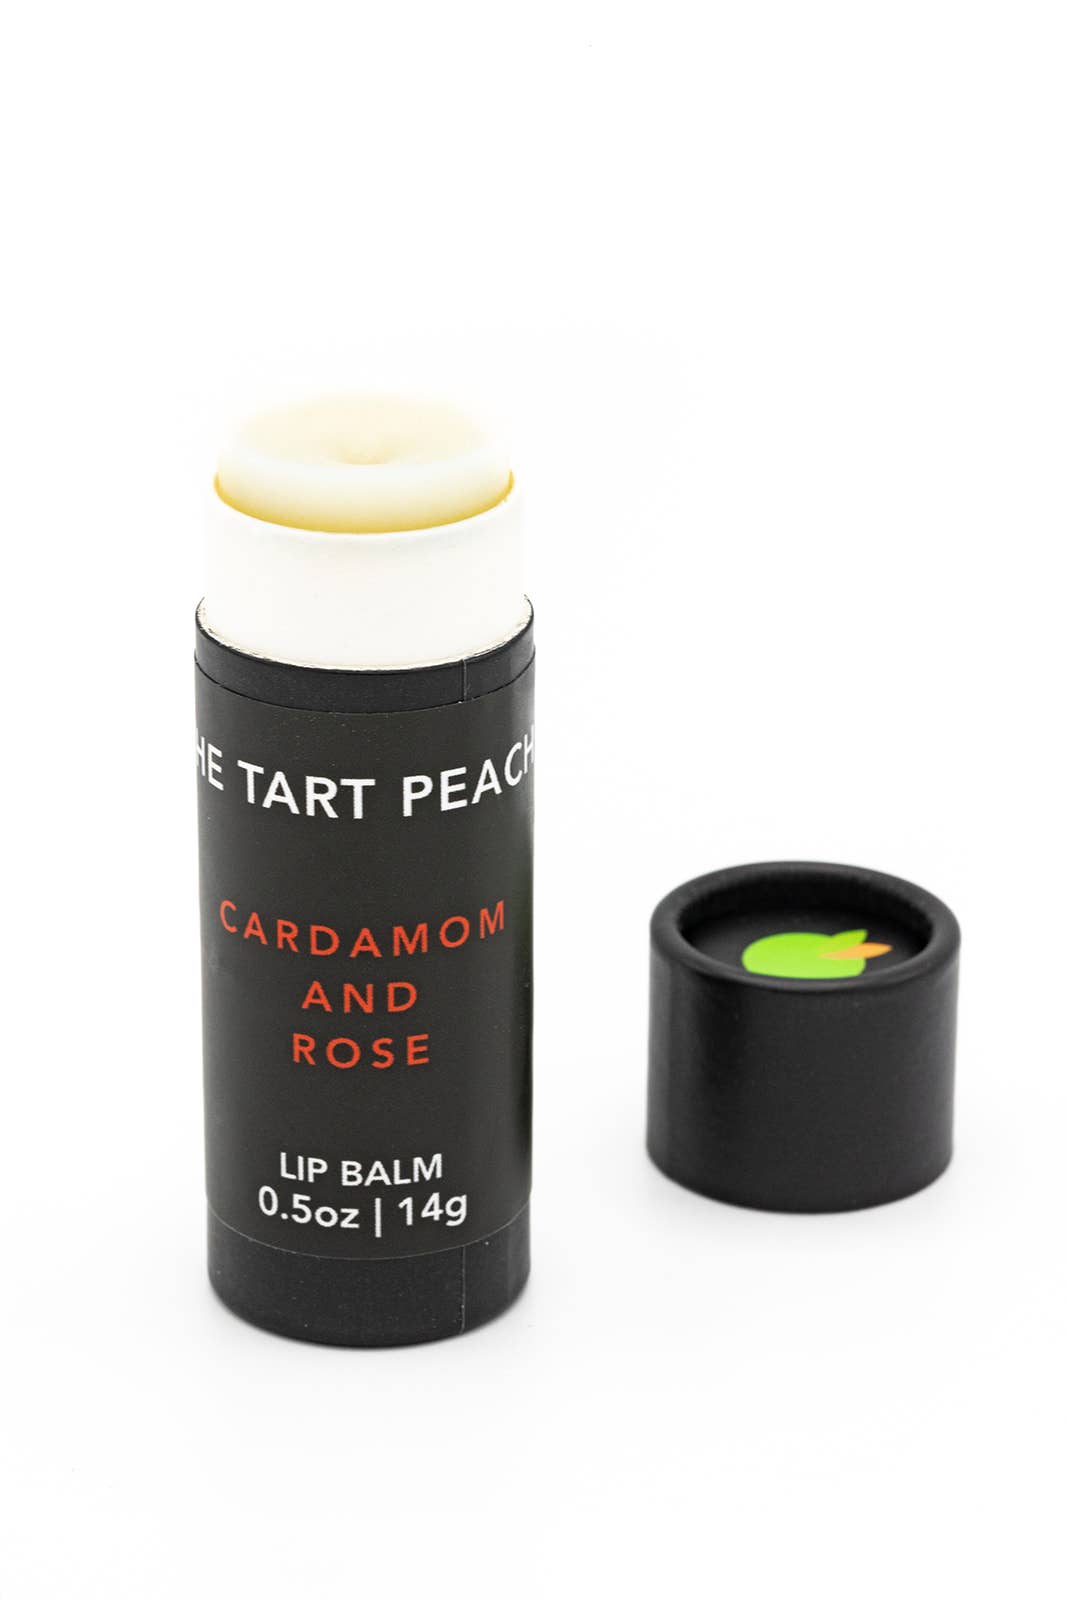 Cardamom and Rose Lip Balm